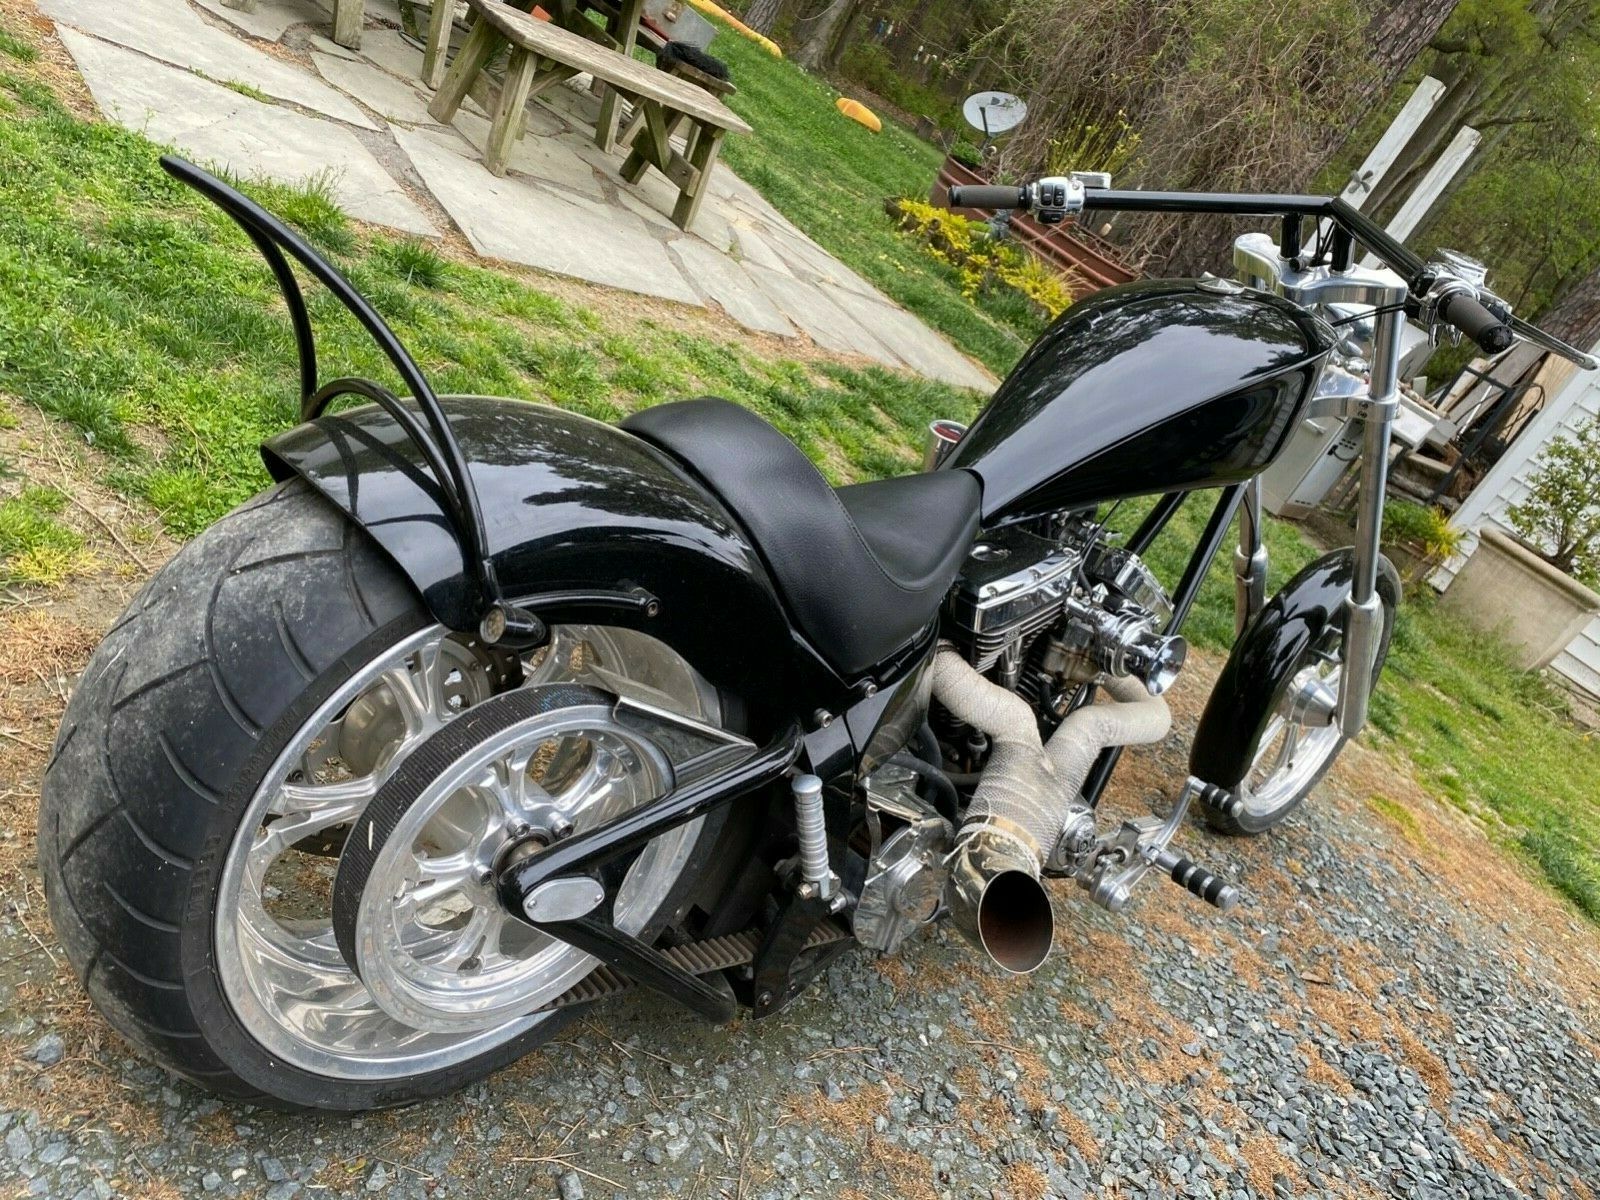 2007 Custom Built Motorcycles Chopper